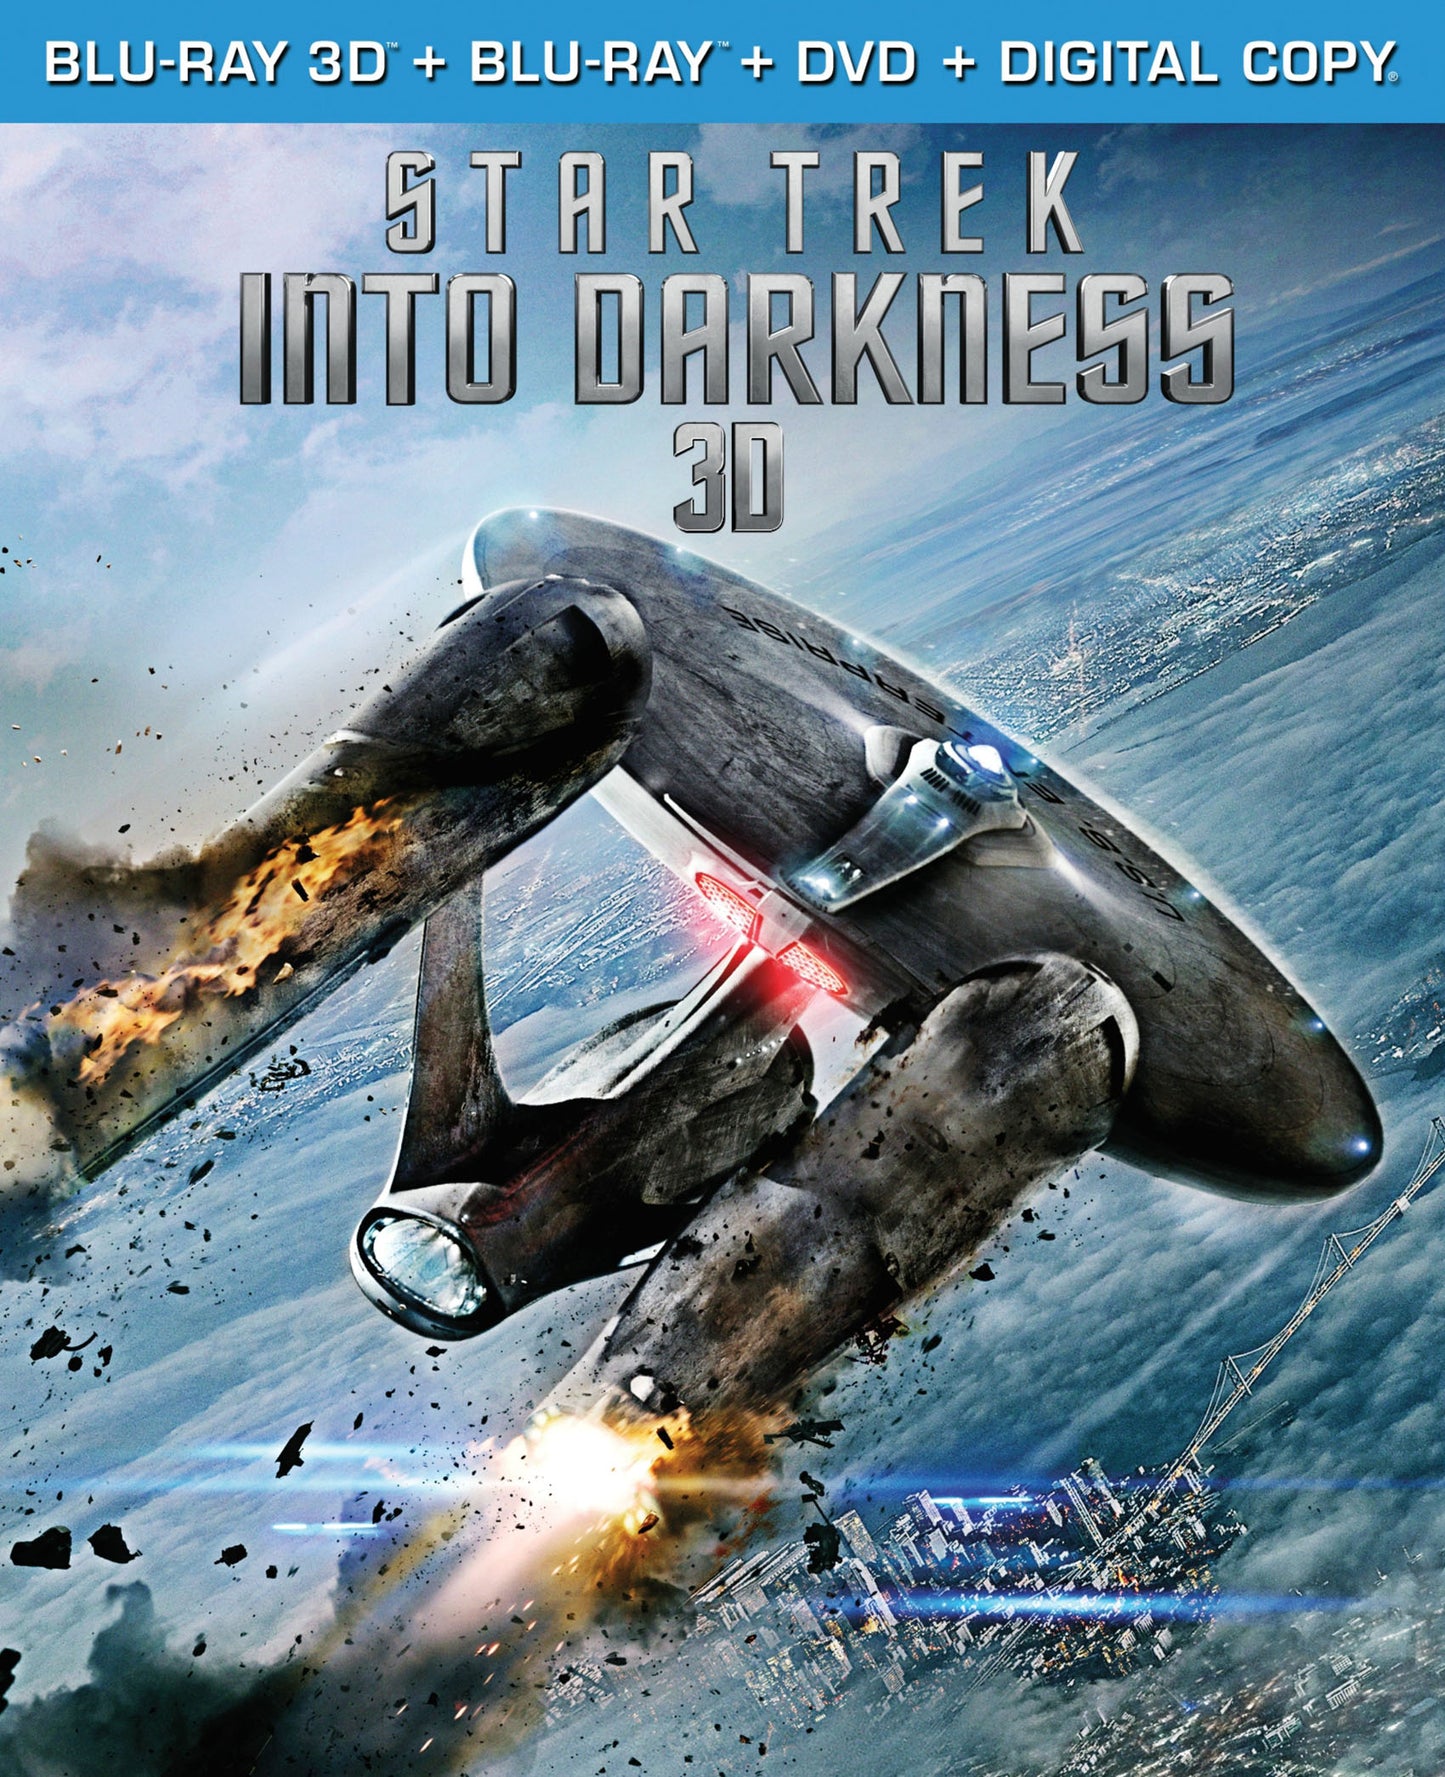 Star Trek Into Darkness 3D [3 Discs] [Includes Digital Copy] [3D] [Blu-ray/DVD] cover art